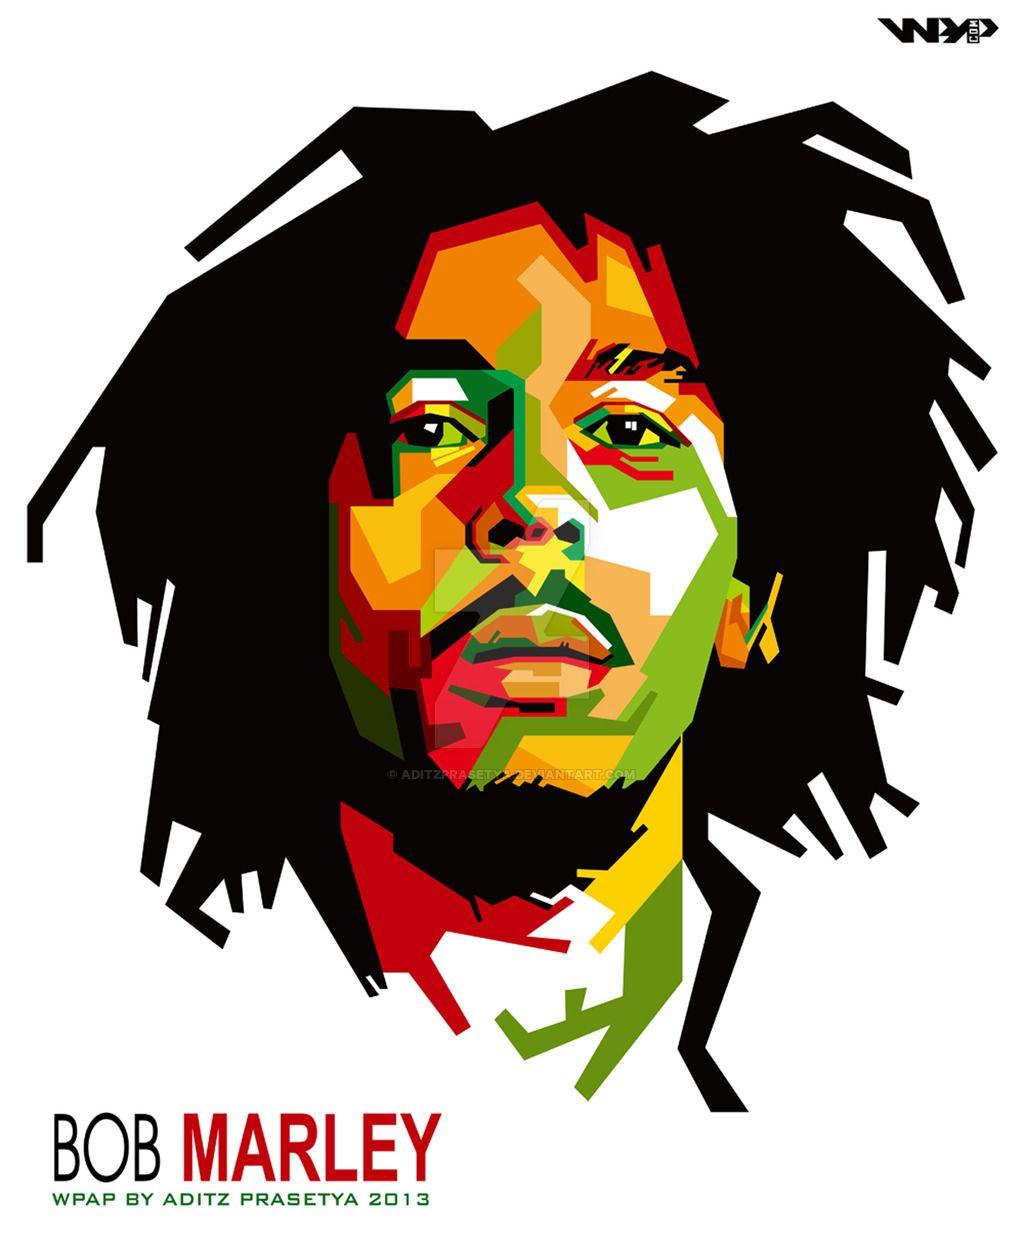 wpap Bob Marley image. Colored Glass WPAP Art